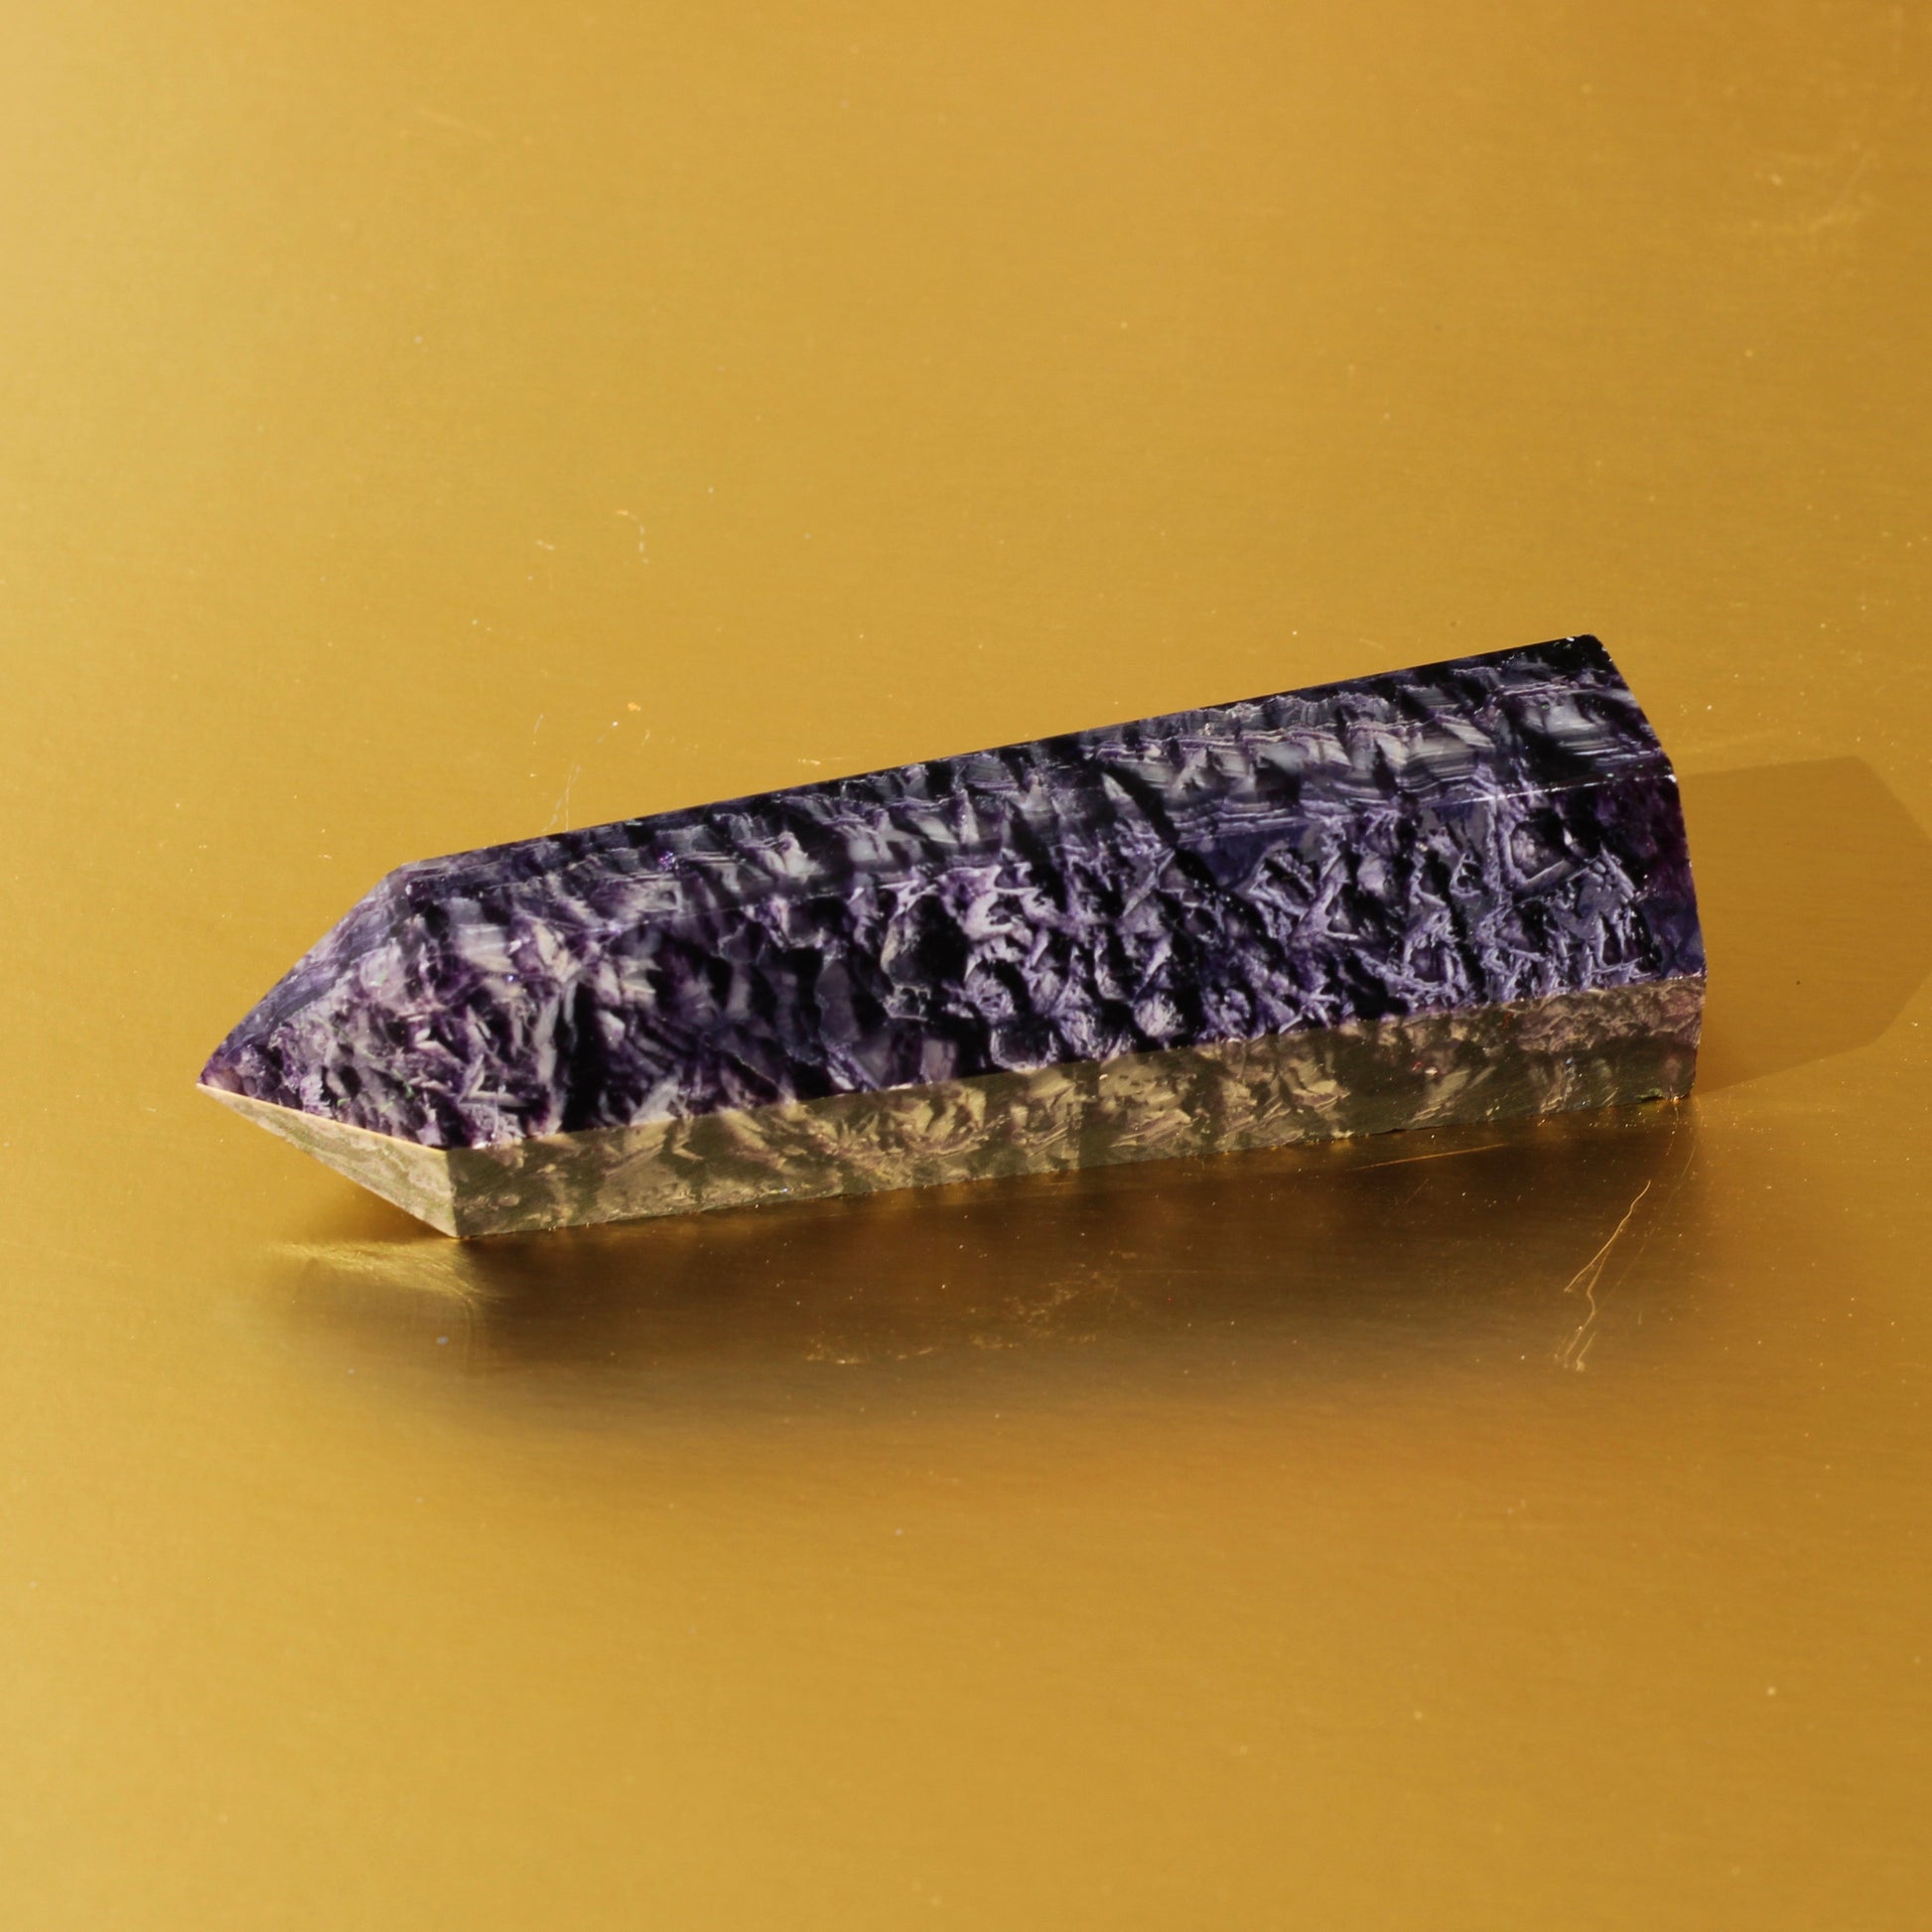 Purple Fluorite Point (No.5) (Extra High Quality) - Emit Energy